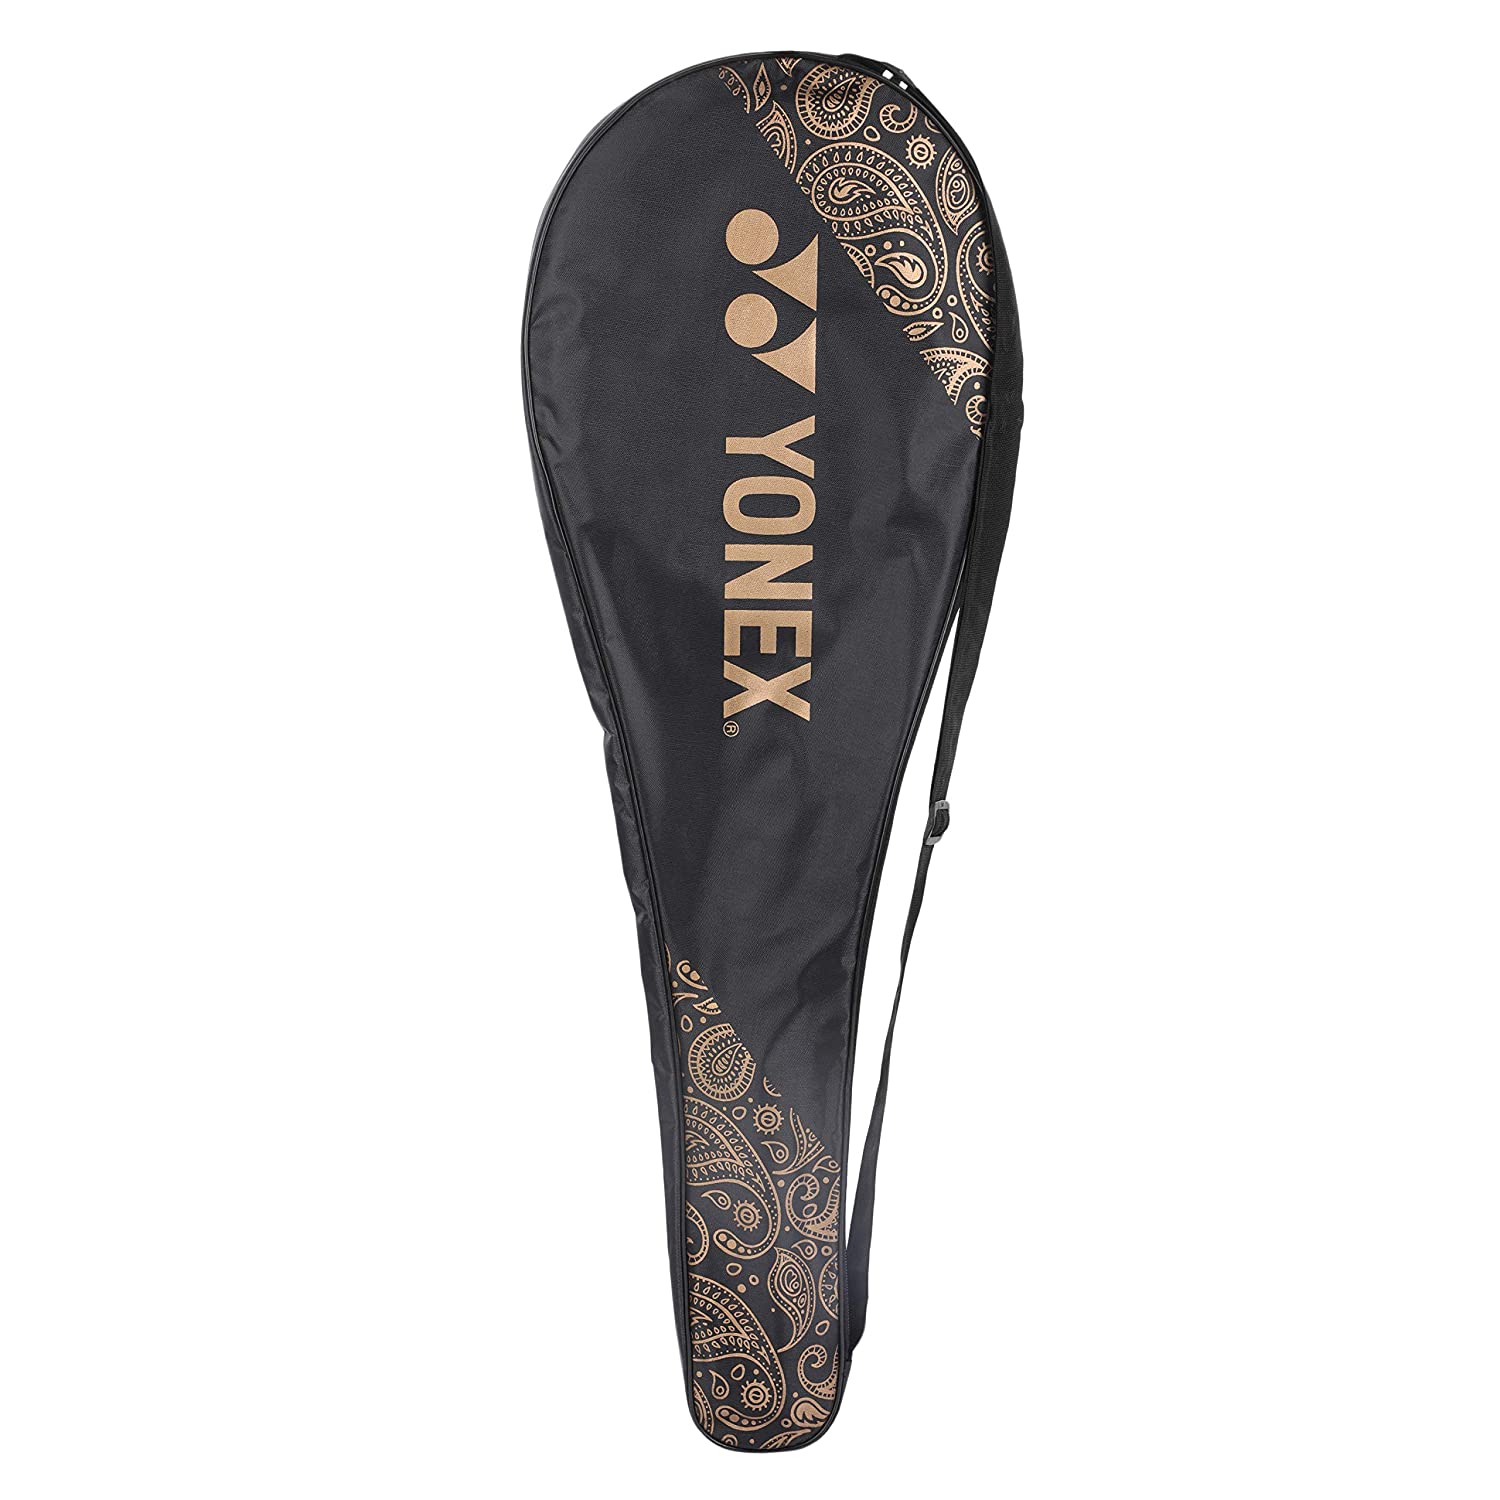 Yonex ZR 101 Aluminium Strung Badminton Racquet with Full Cover (Navy) - Best Price online Prokicksports.com